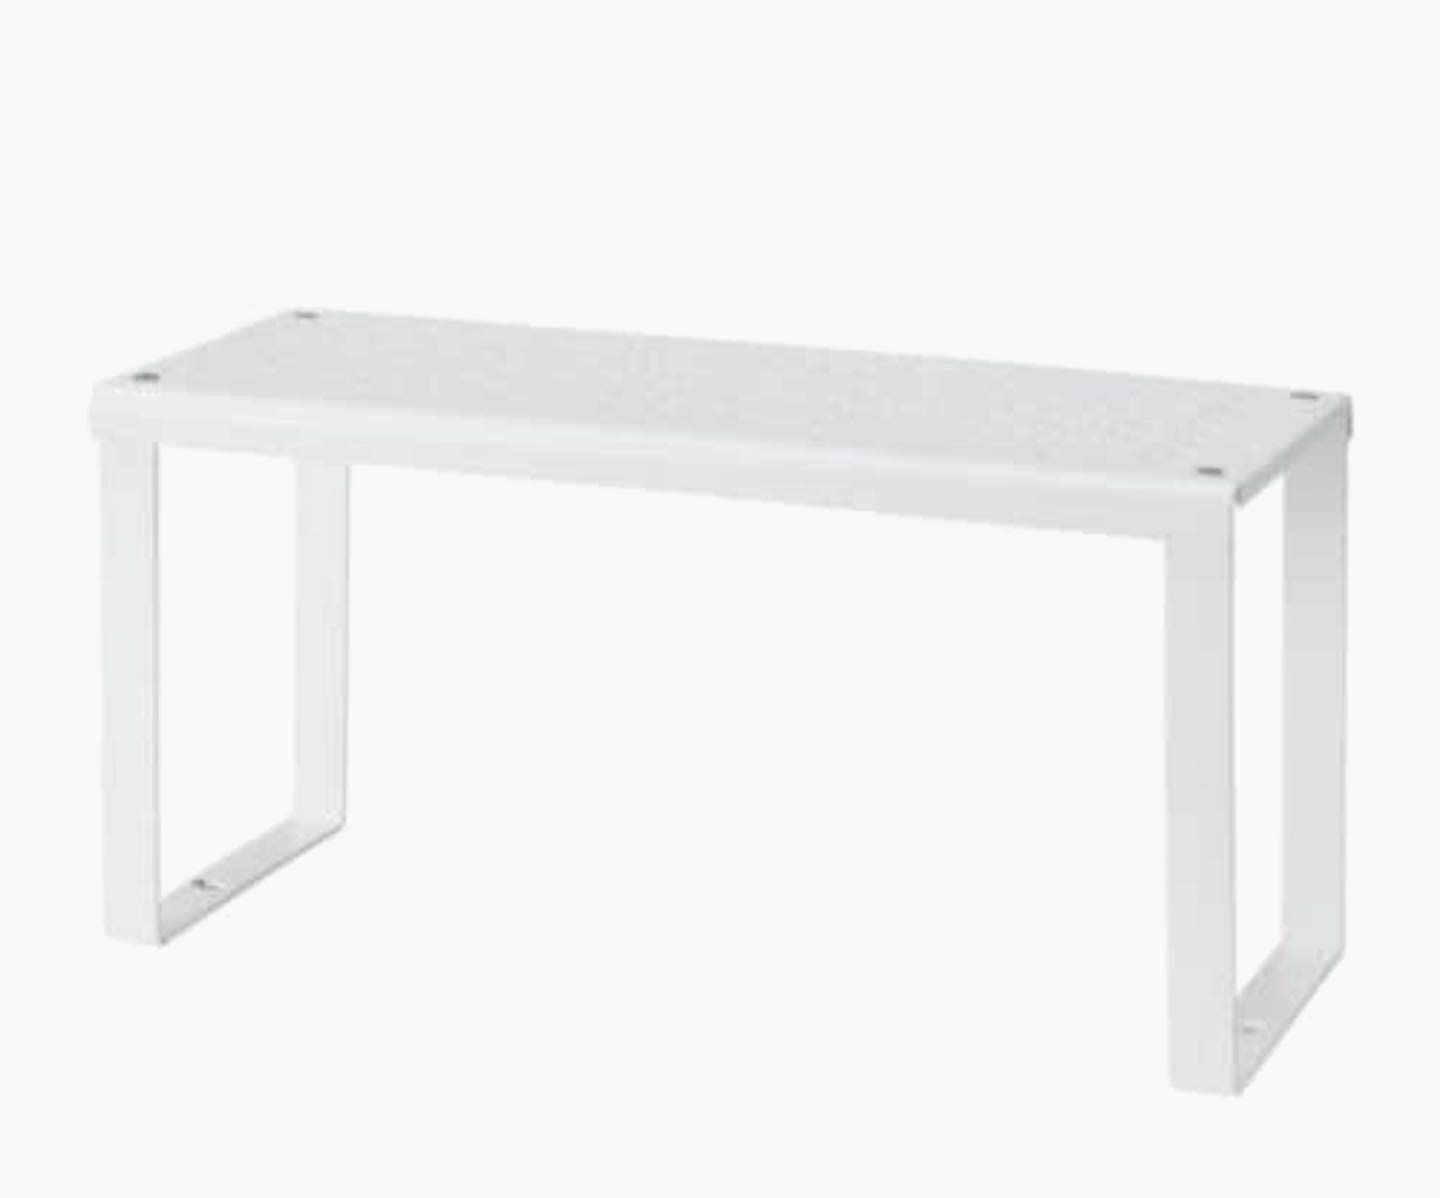 Ikea Variera Shelf Insert White, Cupboard Organiser Large